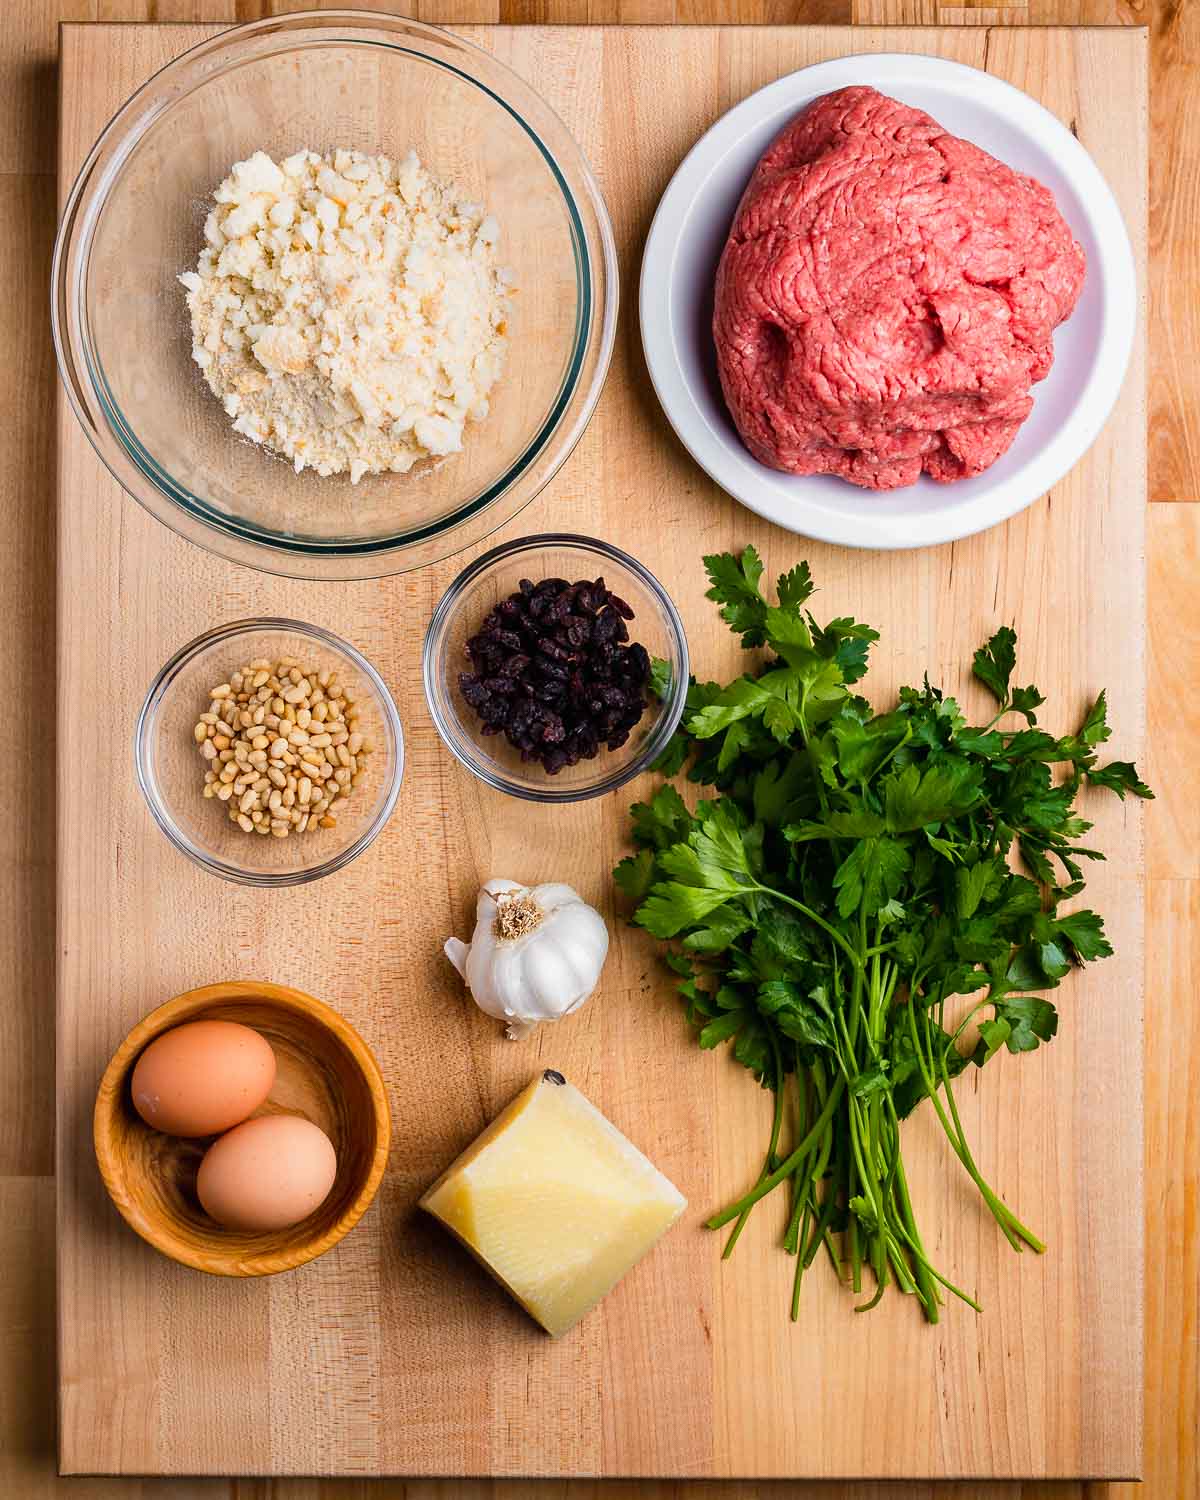 Ingredients shown: Breadcrumbs, ground beef, pine nuts, raisins, parsley, garlic, eggs, and Pecorino.